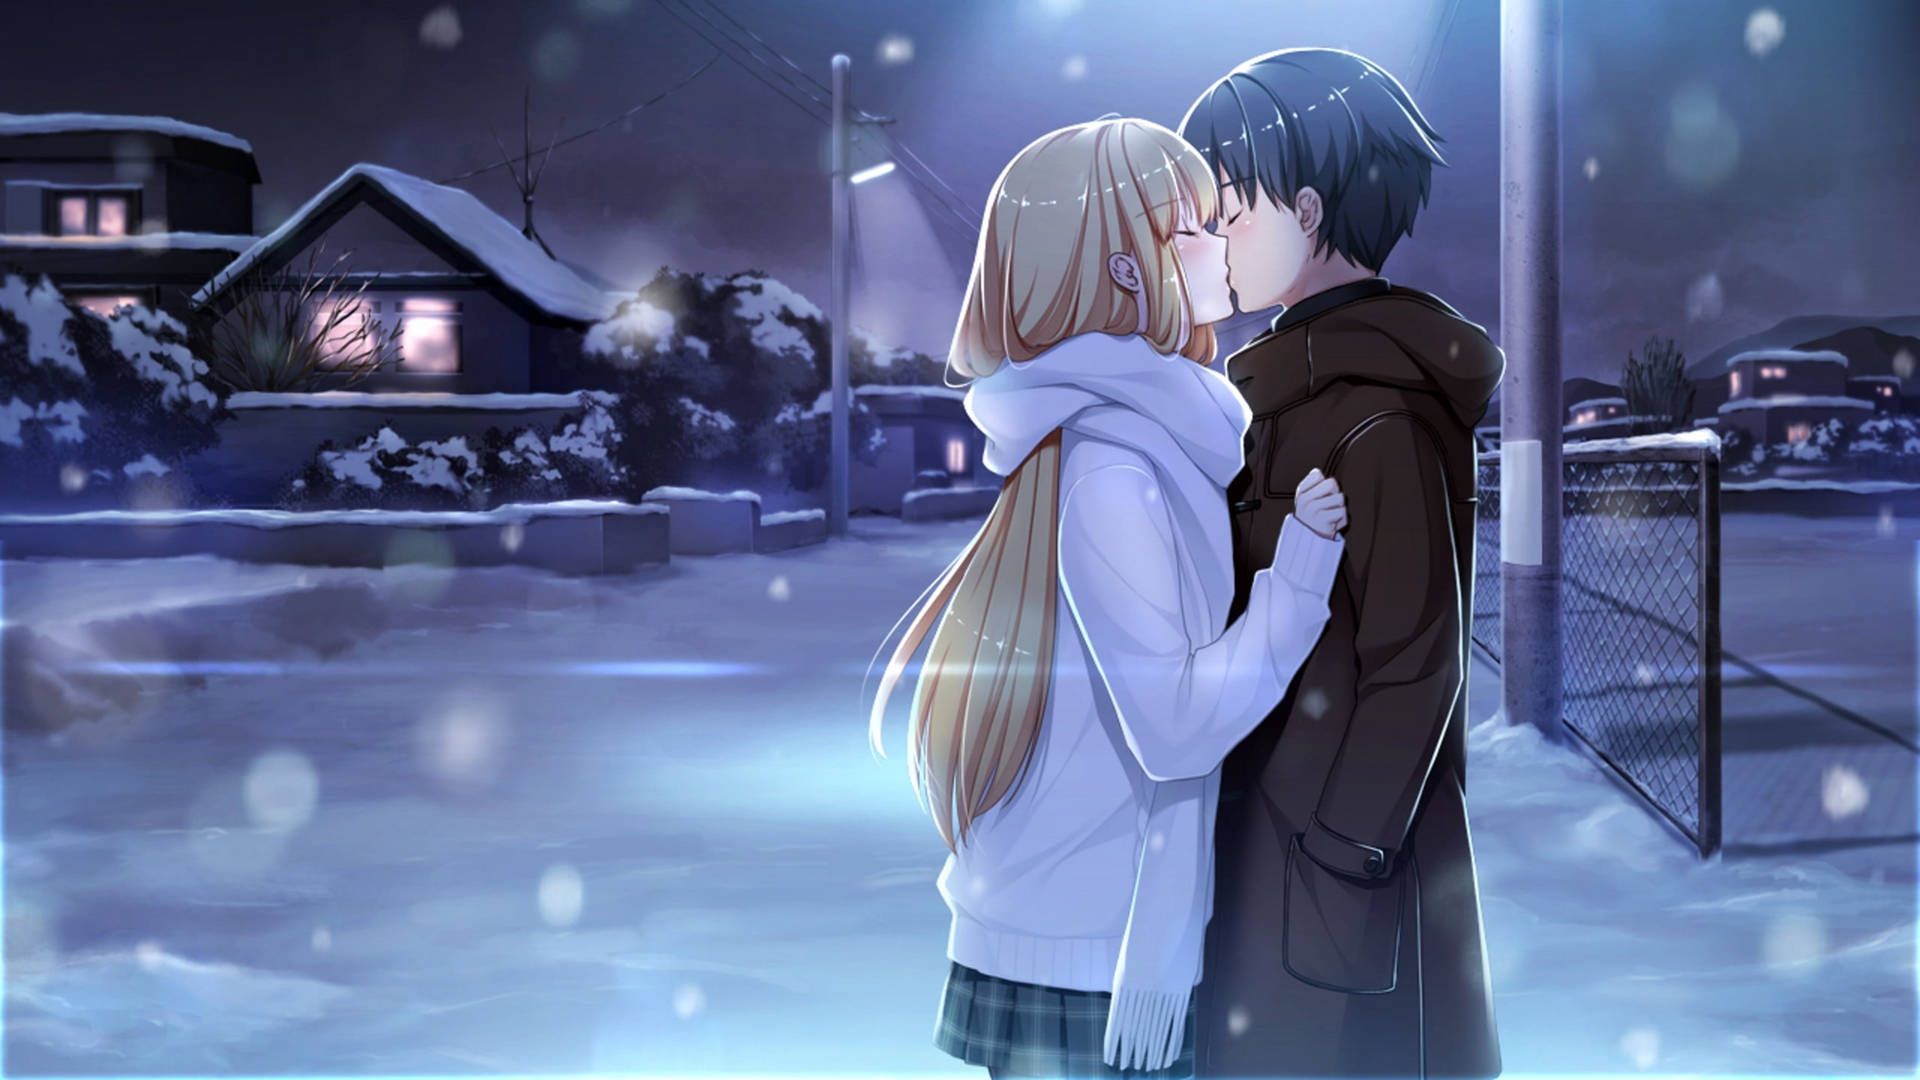 Cute Anime Couple Kissing Winter Night